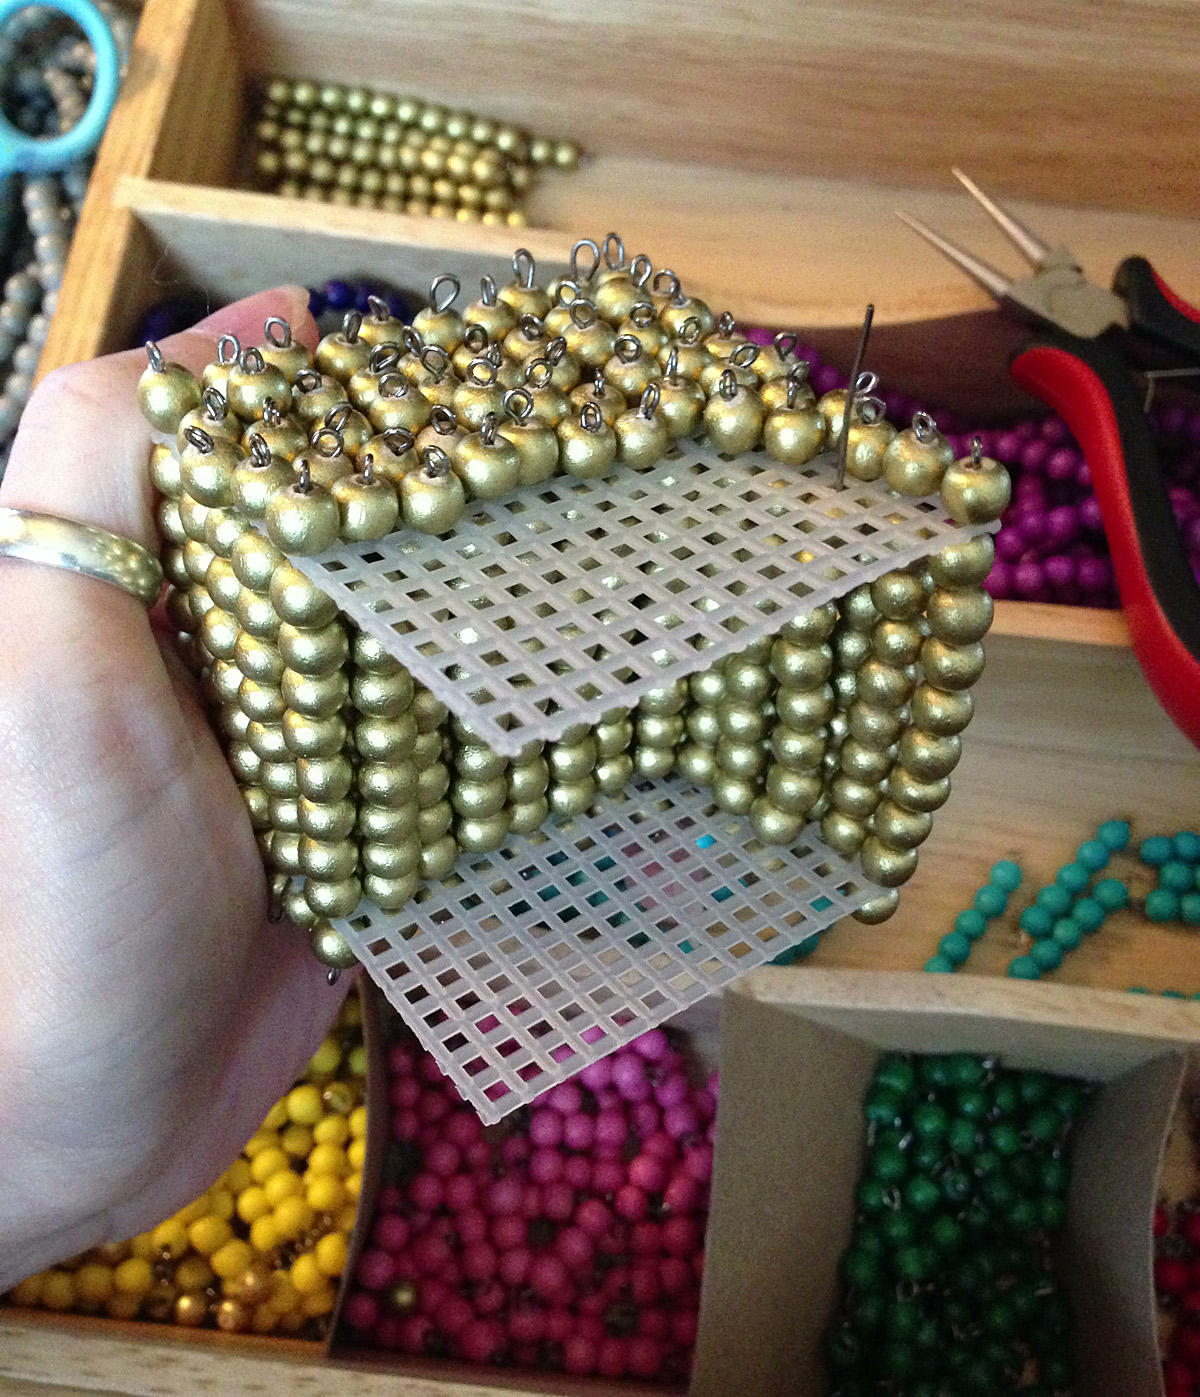 Golden Bead Chain of 1000 Thousand Chain Montessori Mathematics Material 